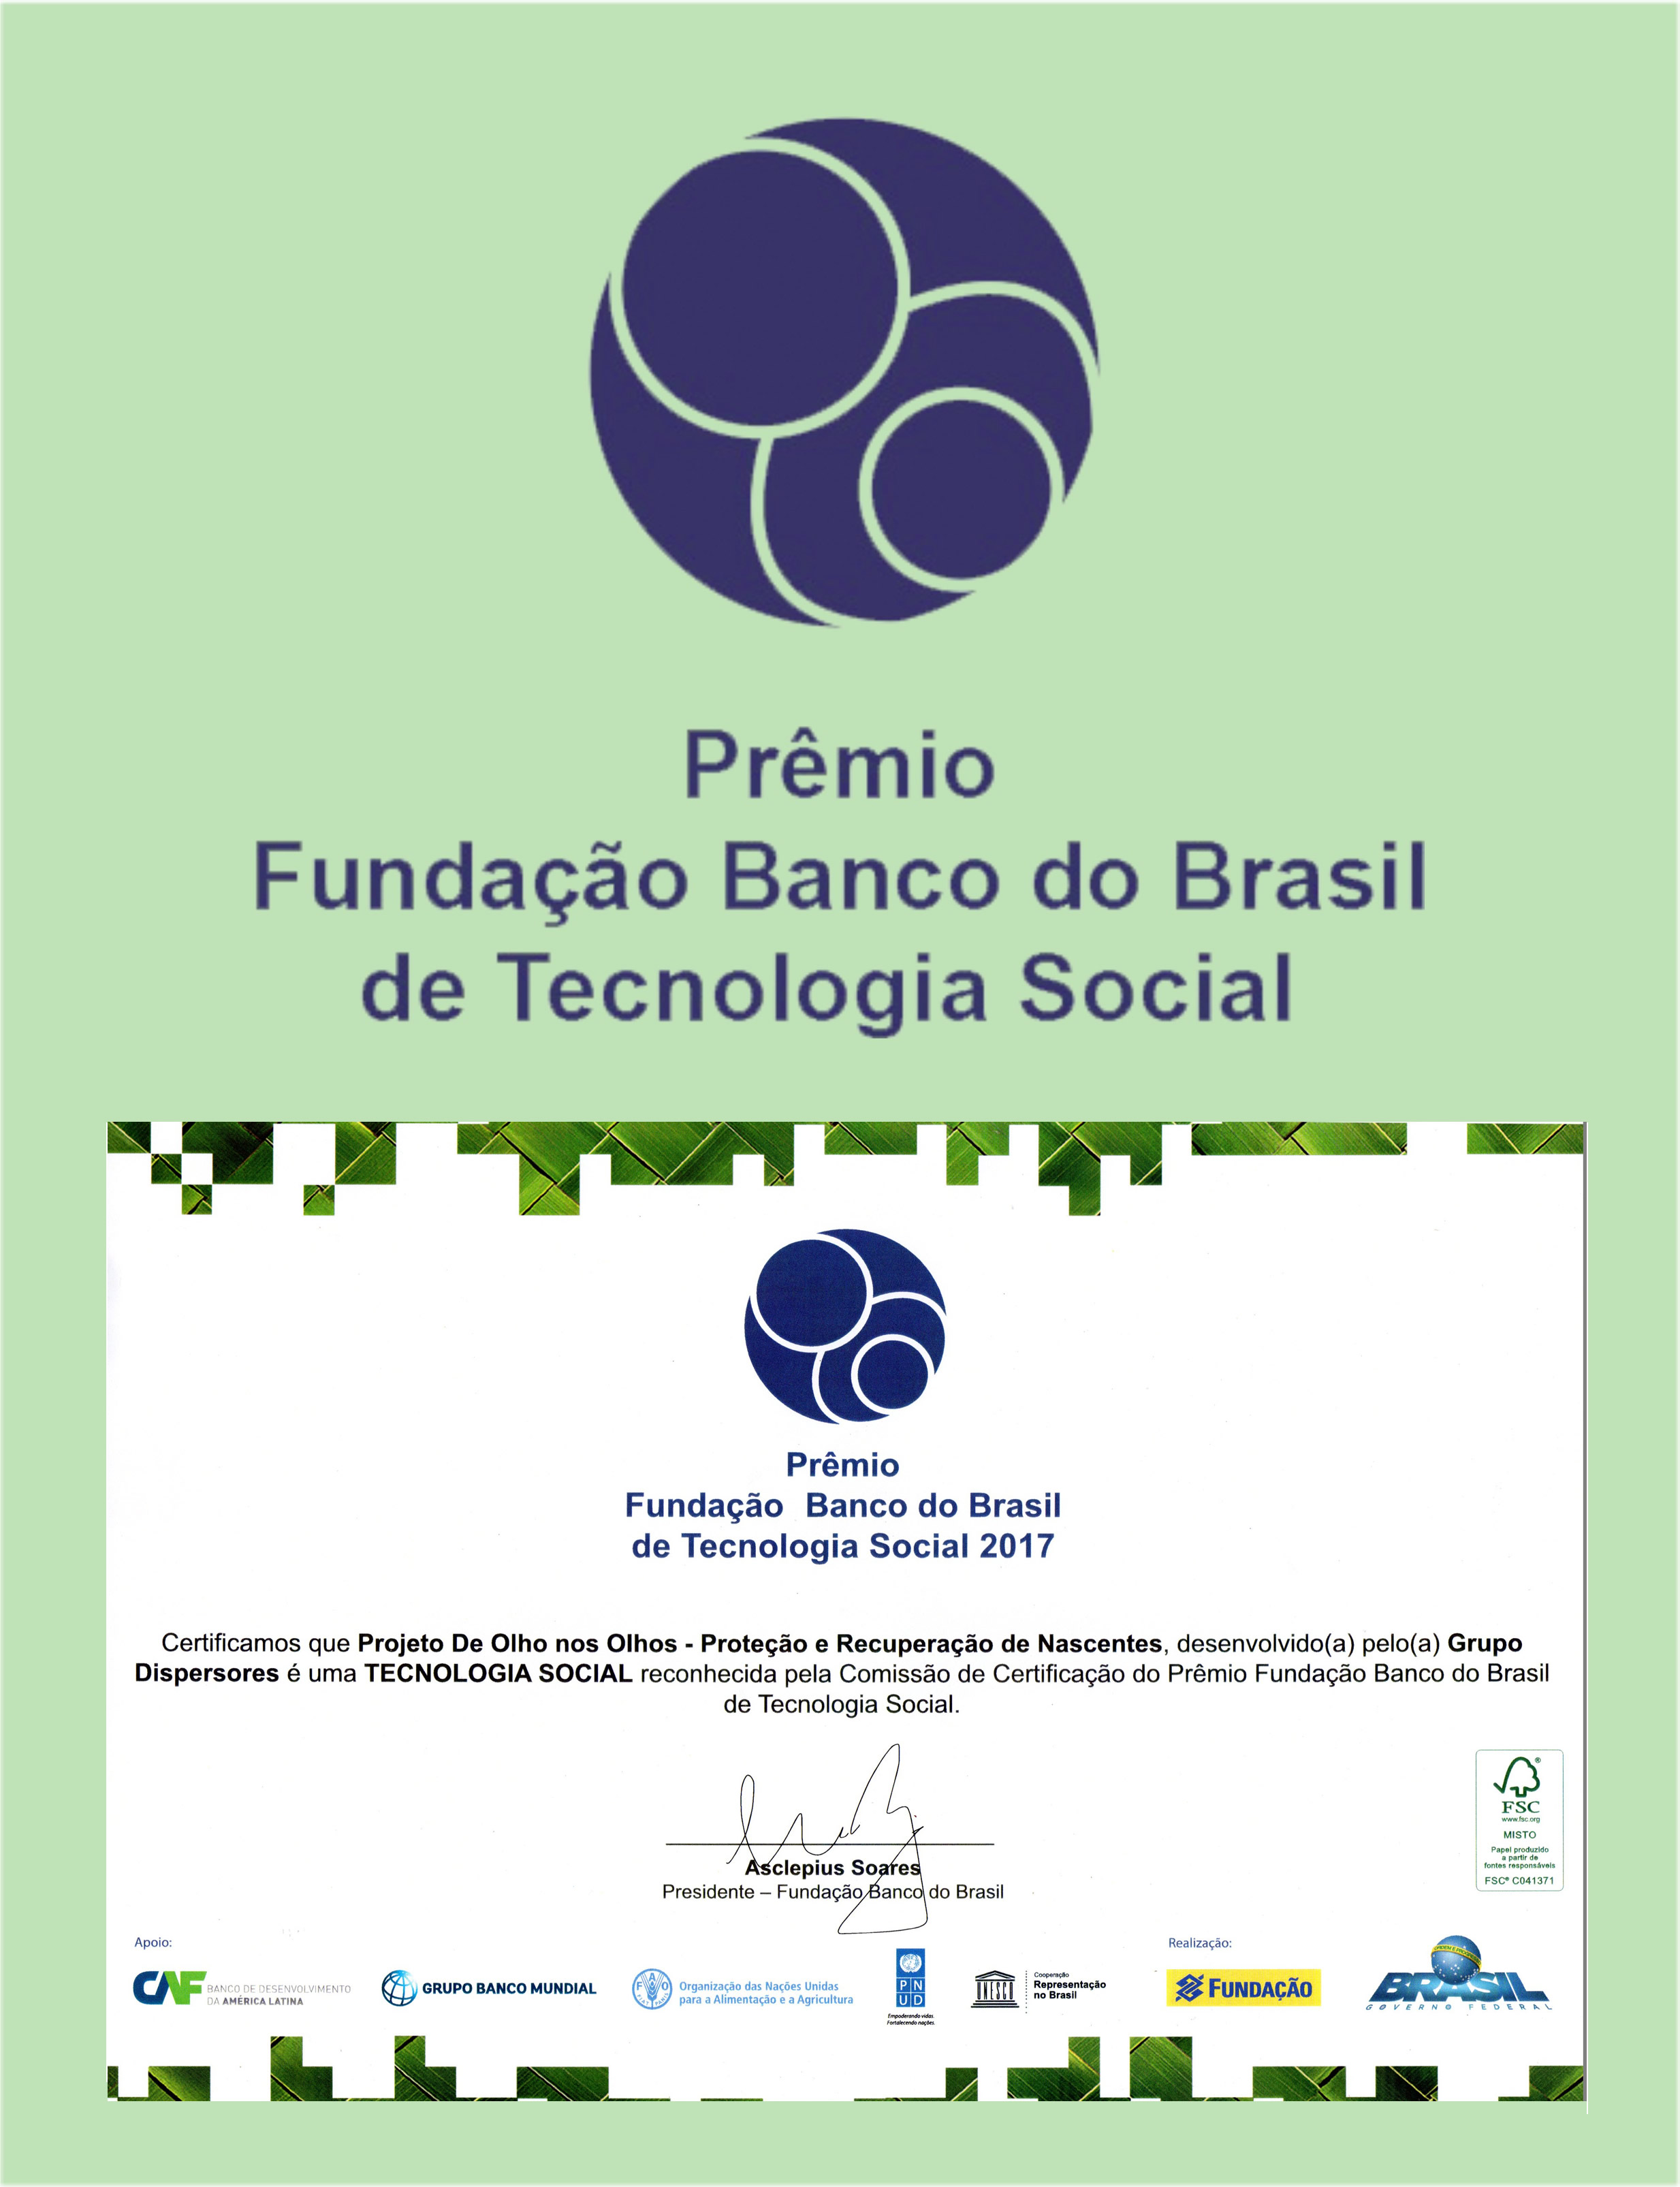 Banco do Brasil Social Technology Foundation Award